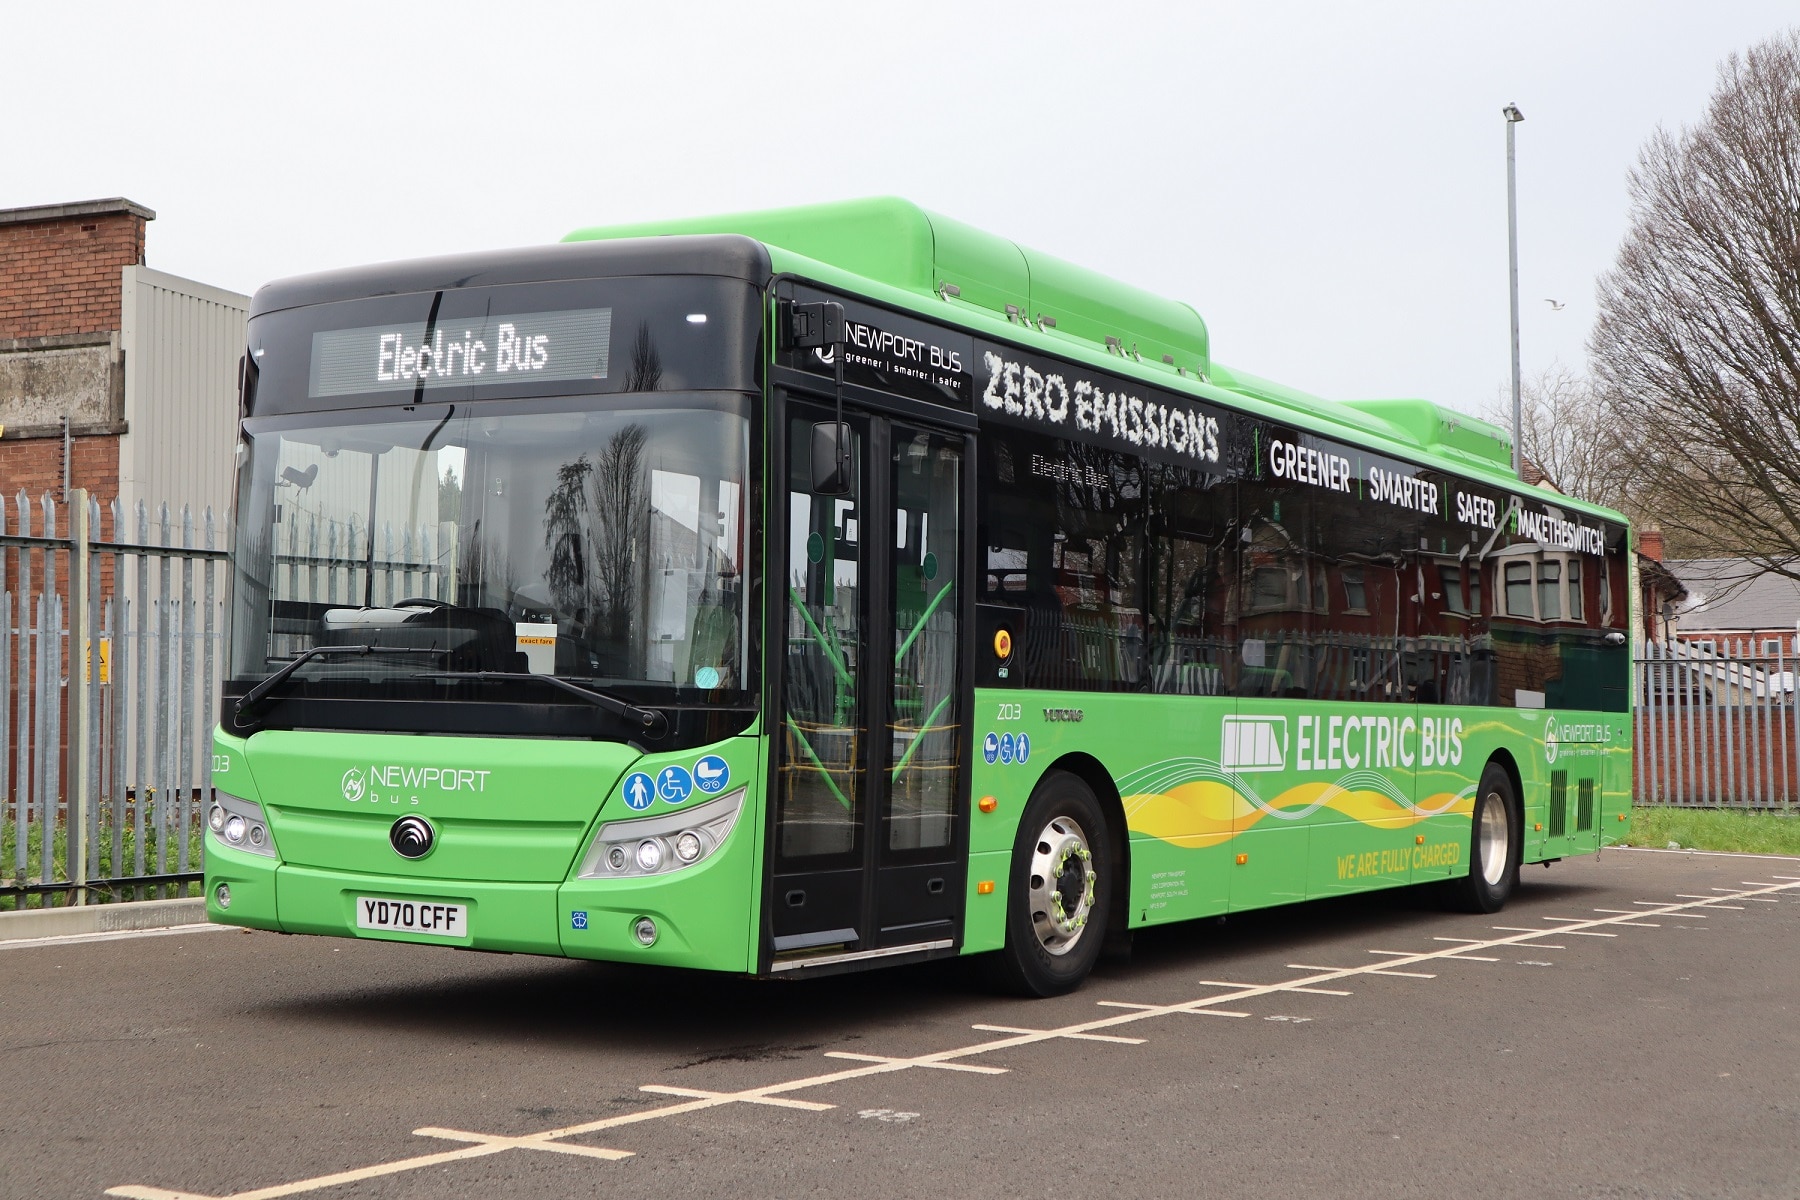 Free bus travel in Newport until 24 December